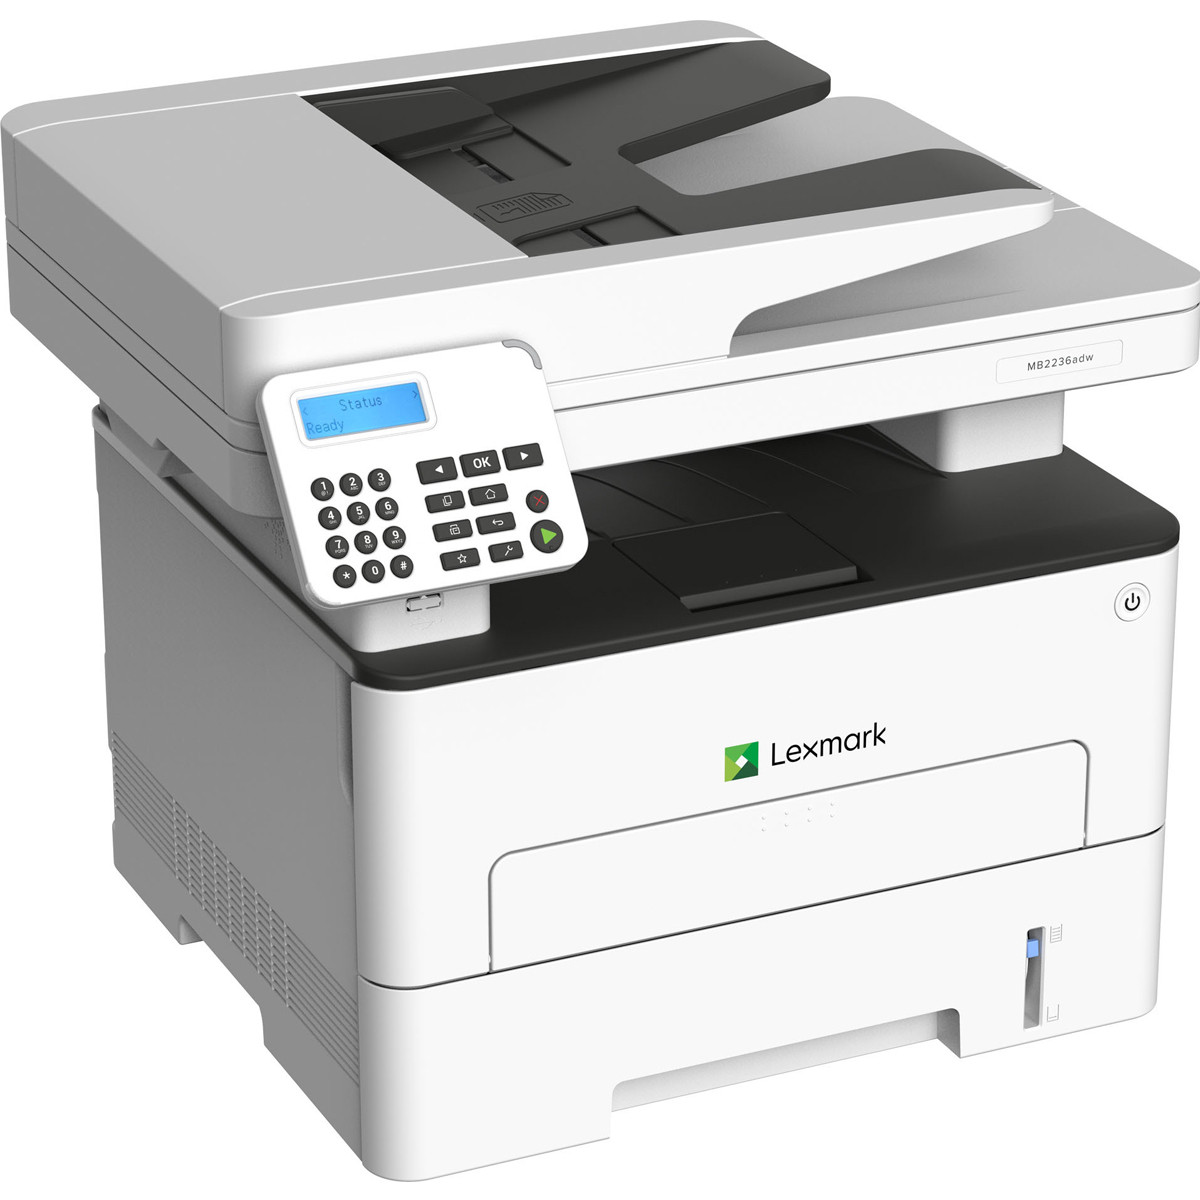 Impressora Lexmark MB2236ADW MB2236 | Multifuncional Laser Monocromática com Rede e Duplex